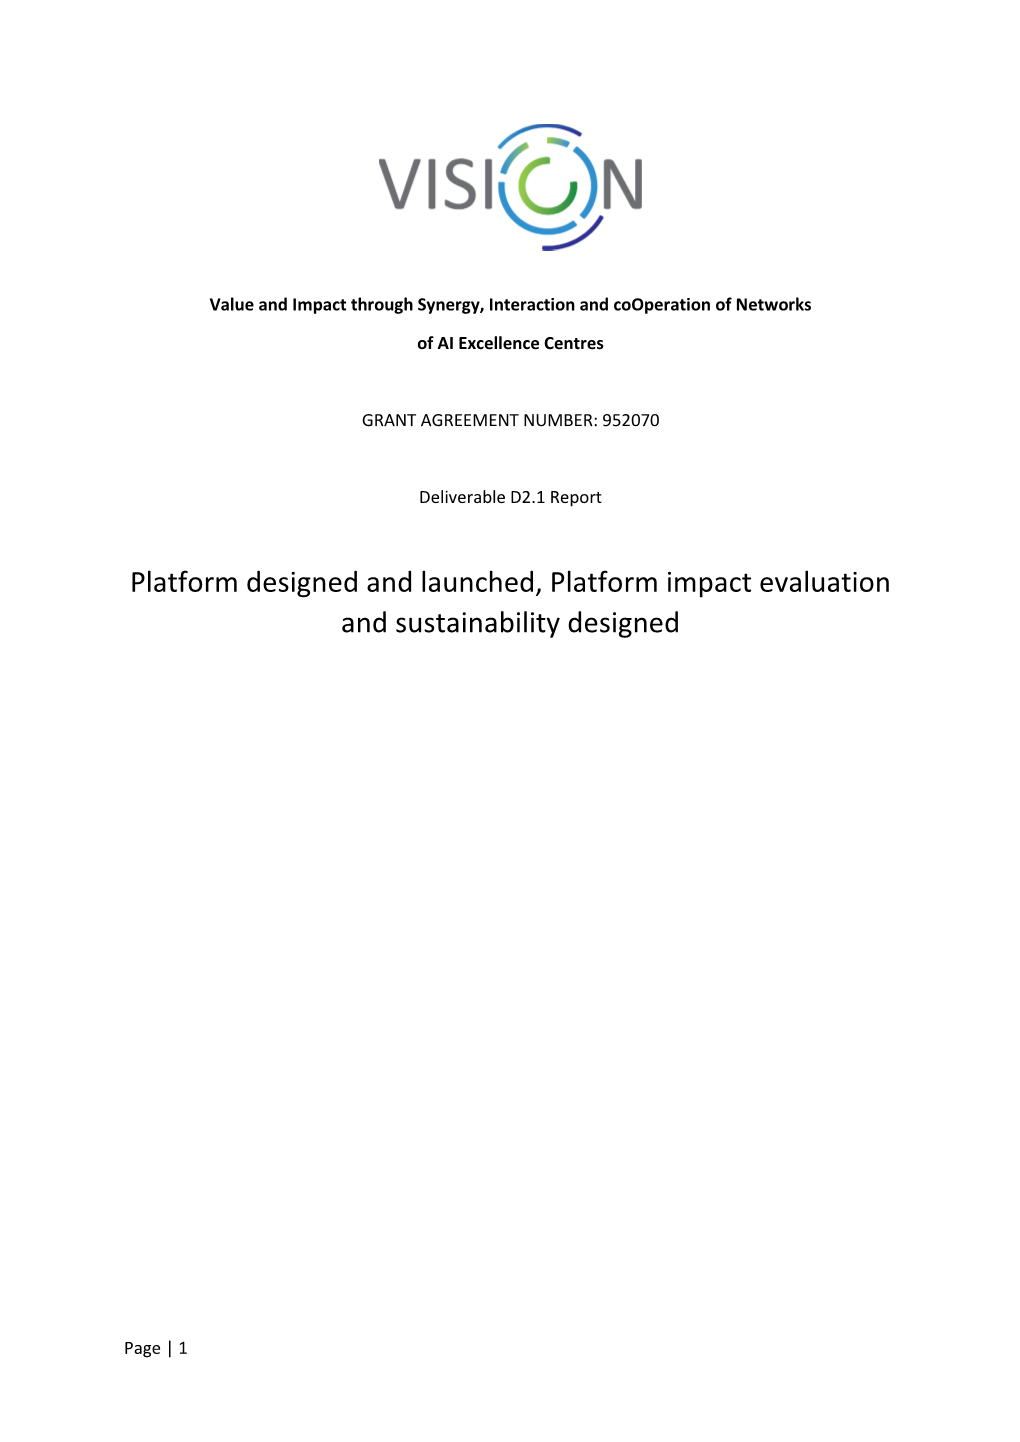 Platform Designed and Launched, Platform Impact Evaluation and Sustainability Designed